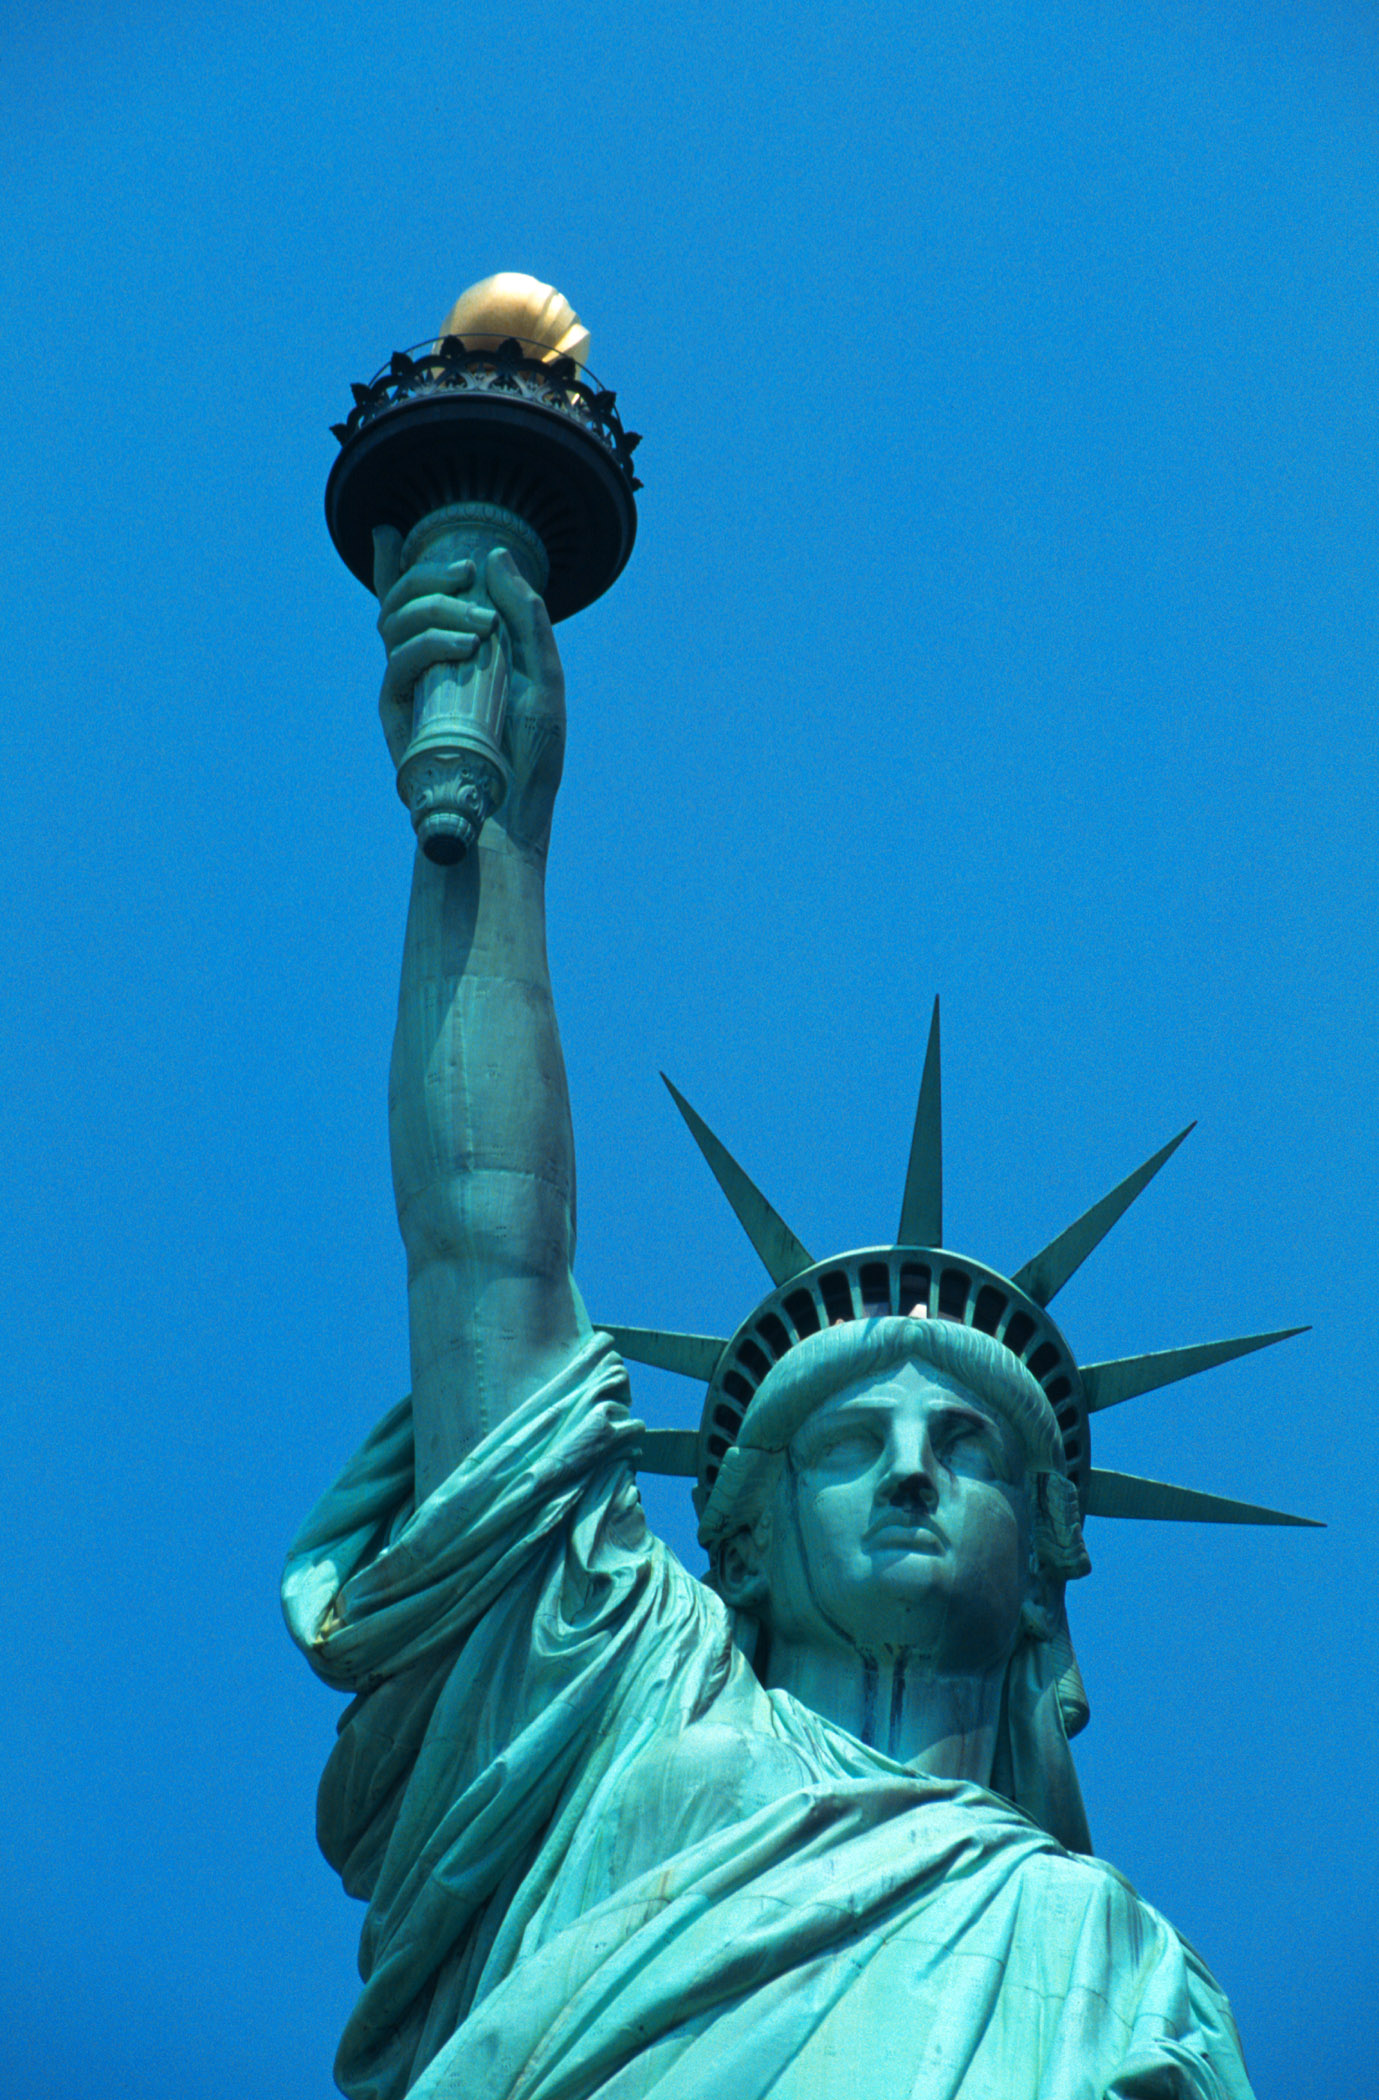 Statue of Liberty. 